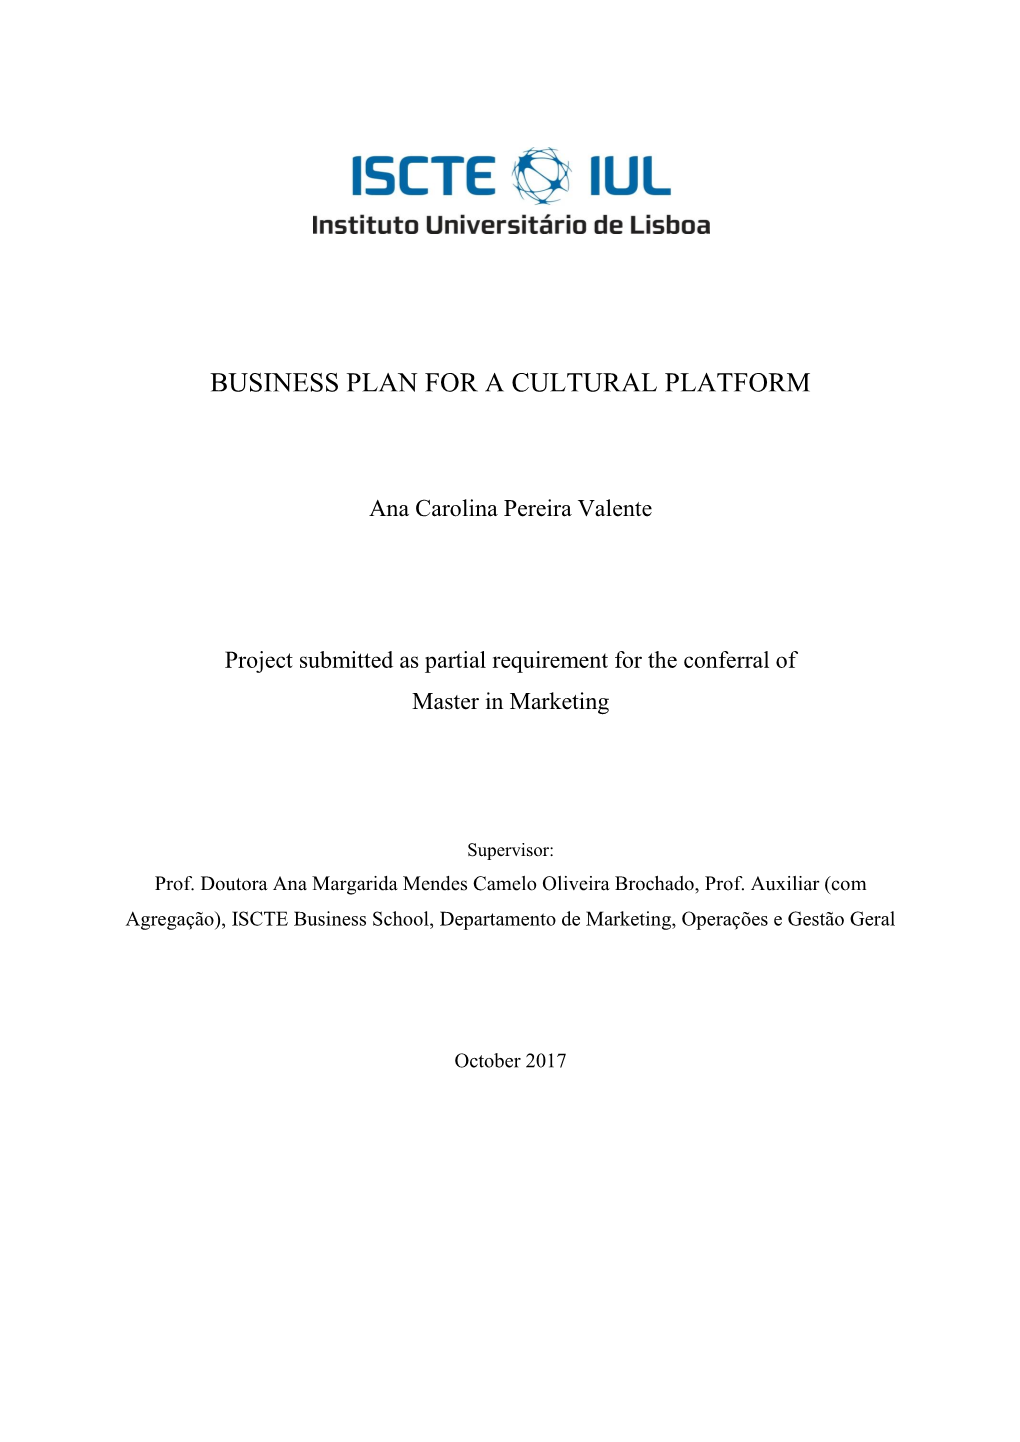 Business Plan for a Cultural Platform